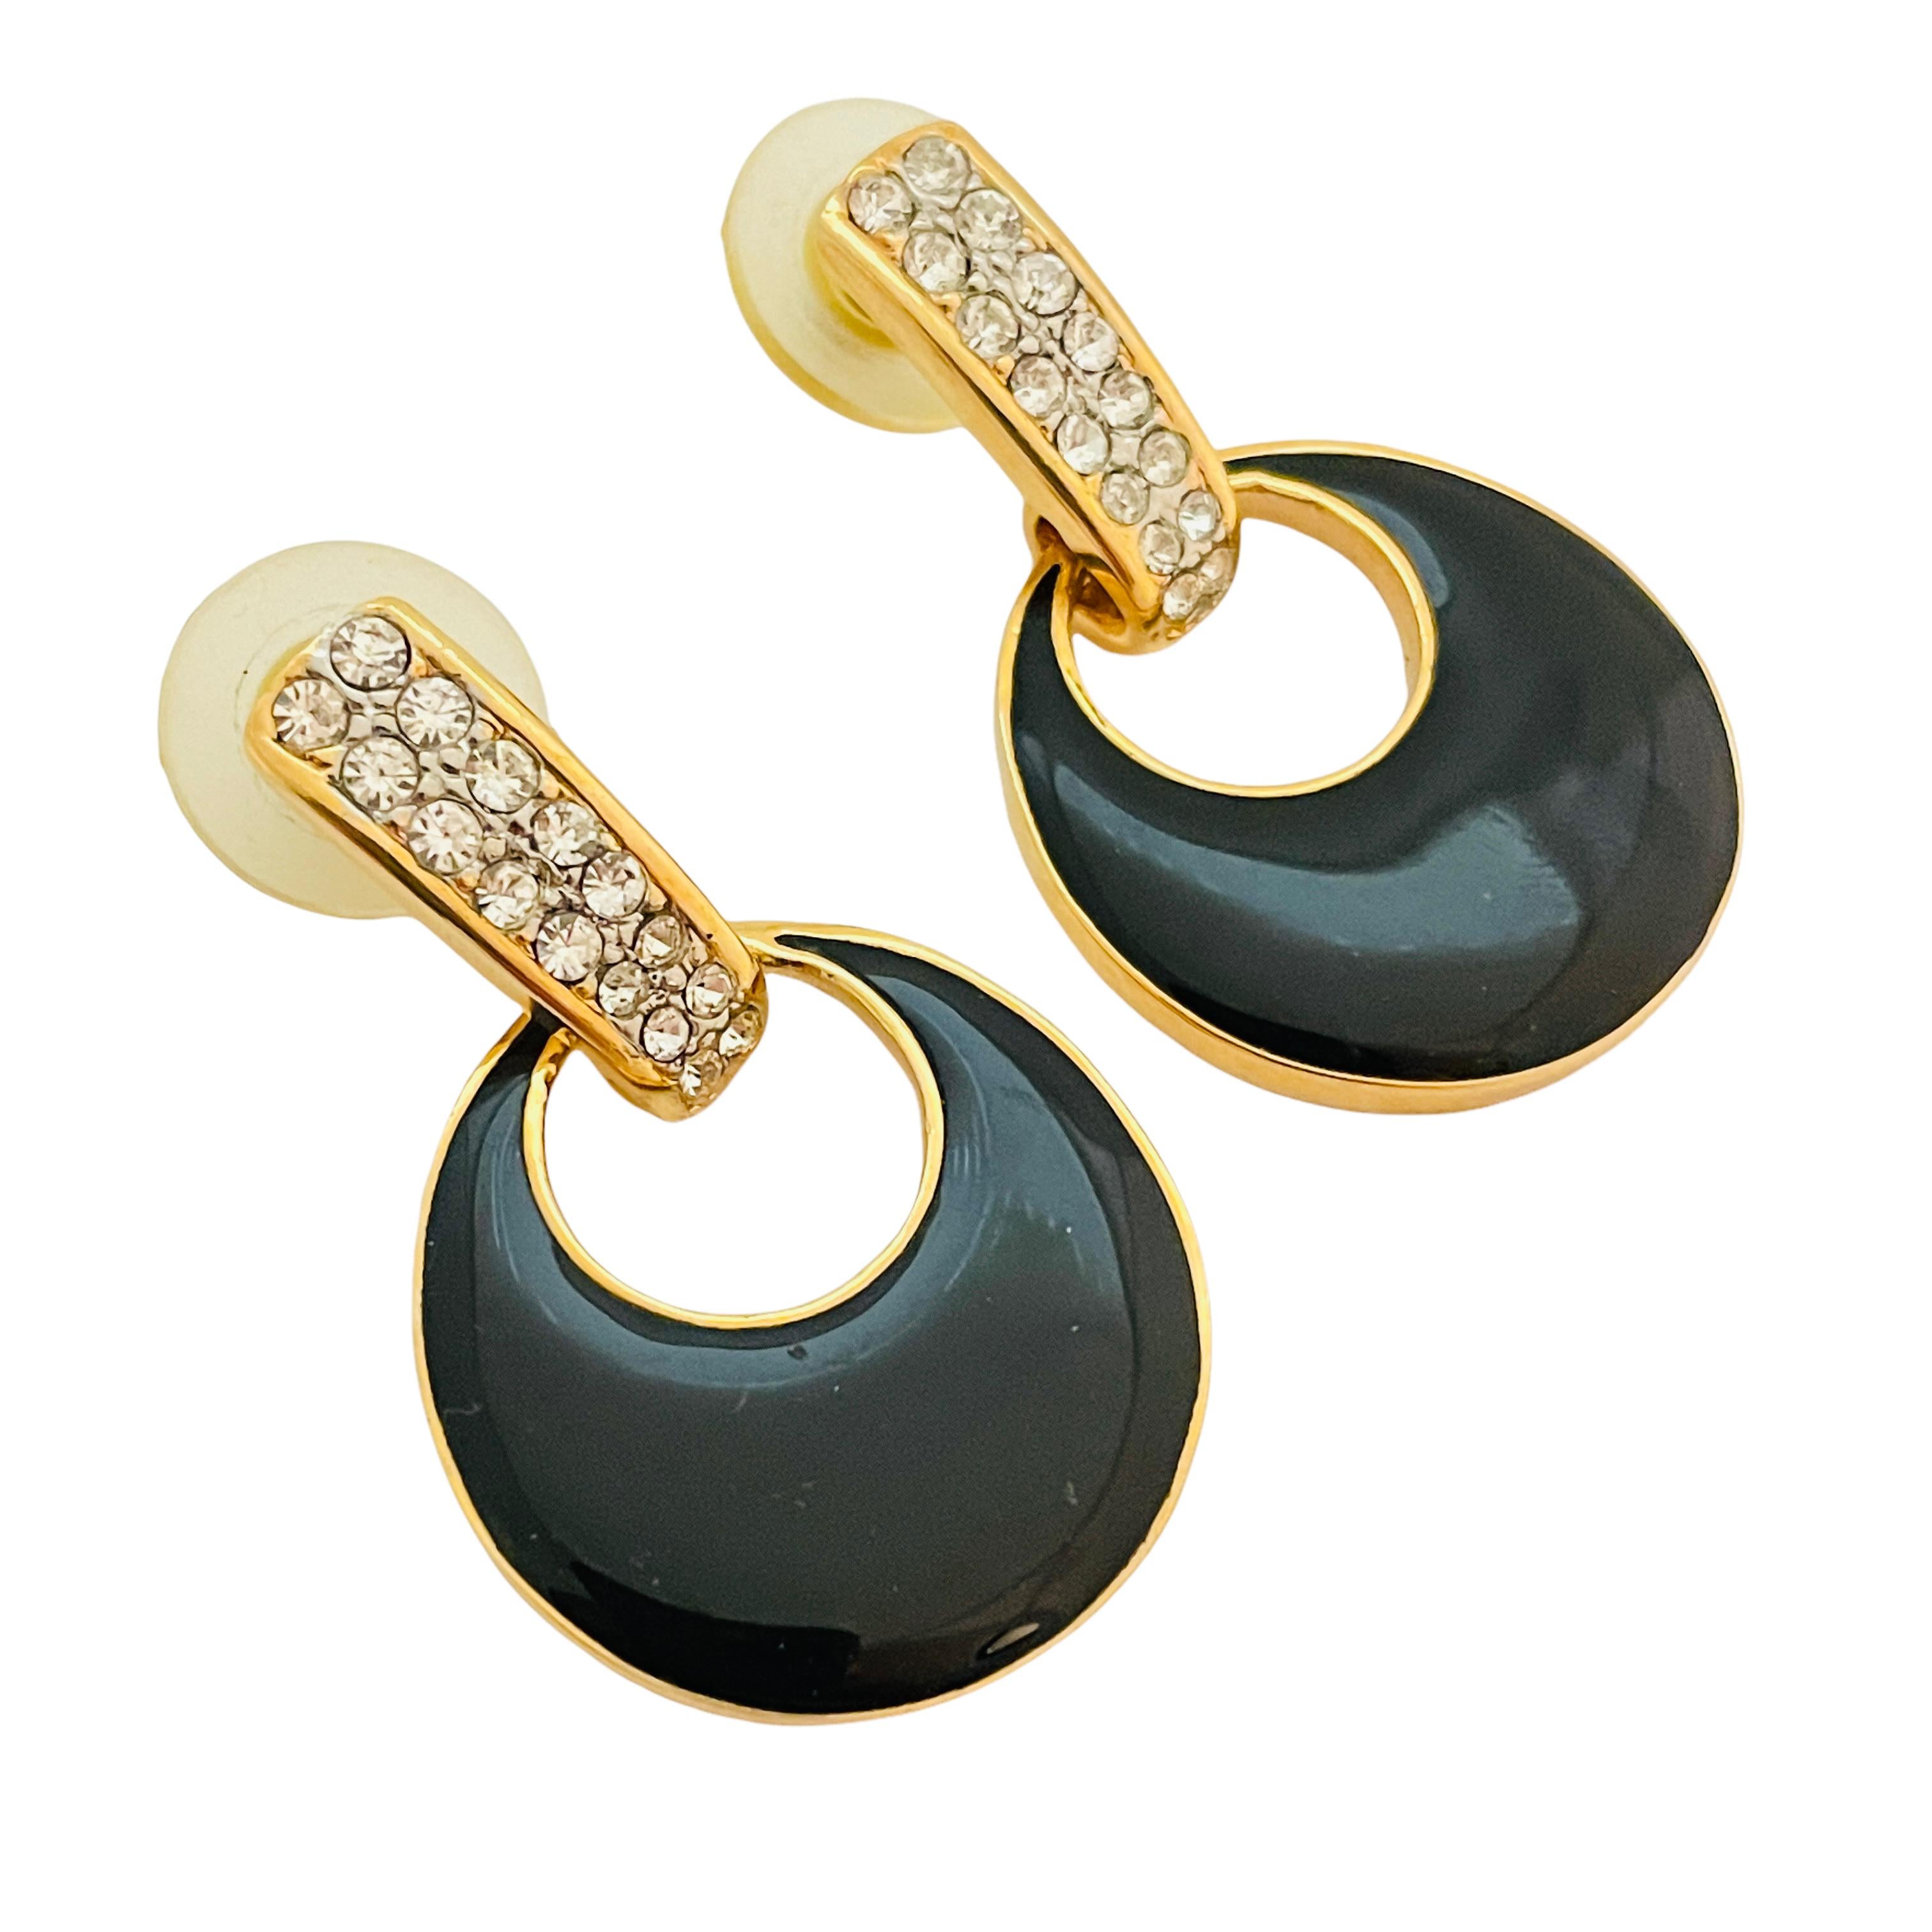 DETAILS

• unsigned

• gold tone with enamel and rhinestones

• vintage designer runway earrings

MEASUREMENTS

• 1.5